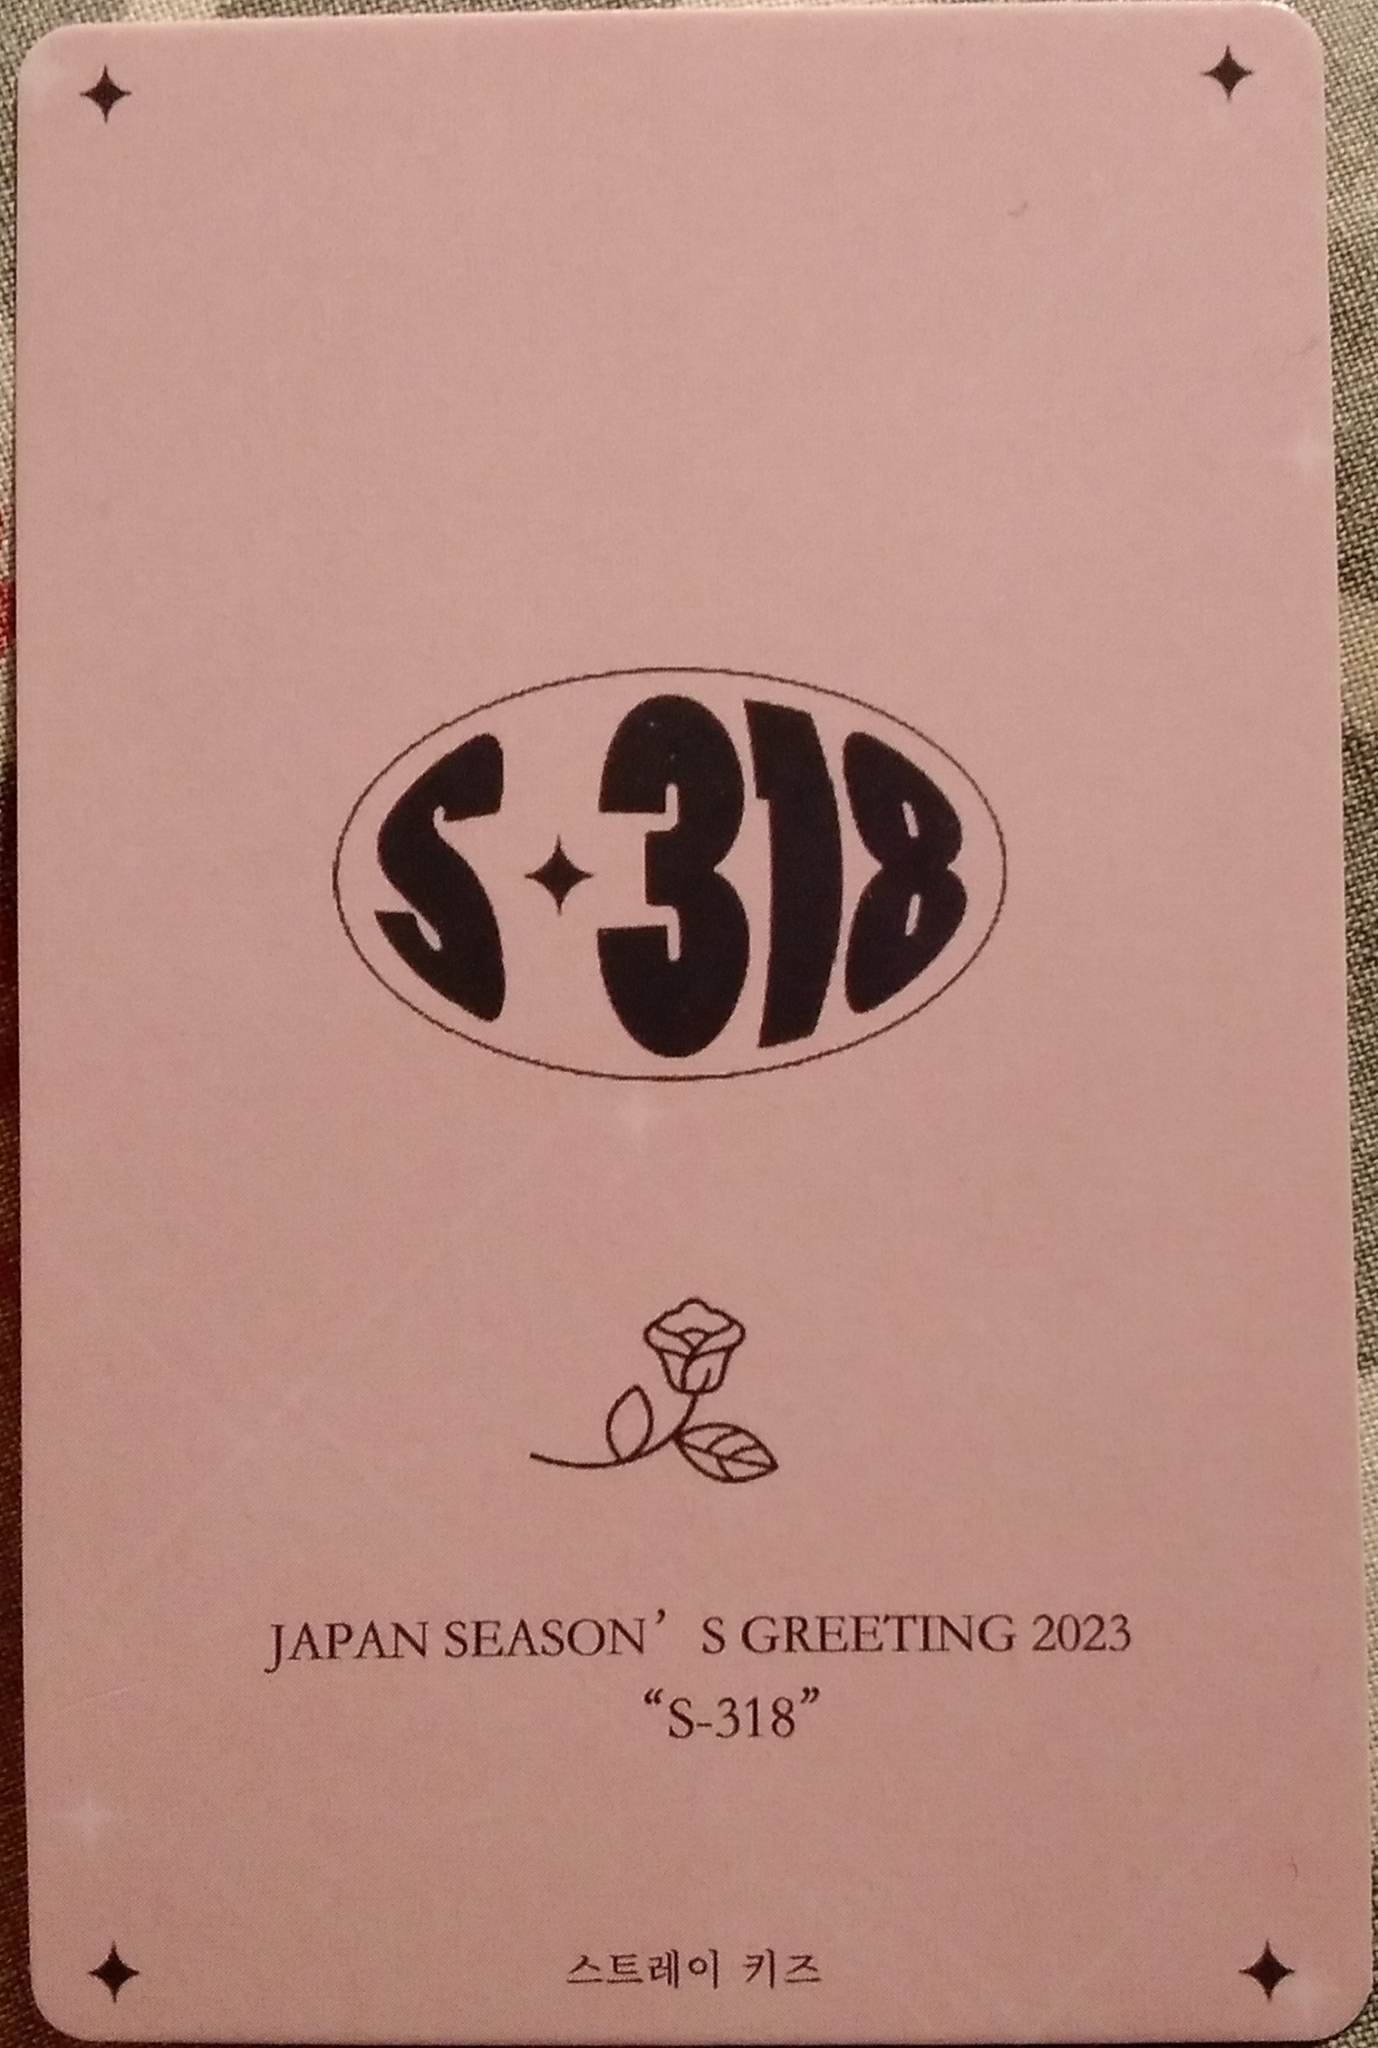 Photocard  STRAYKIDS  Japan season s greetings 2023  "S-318"  Hyunjin